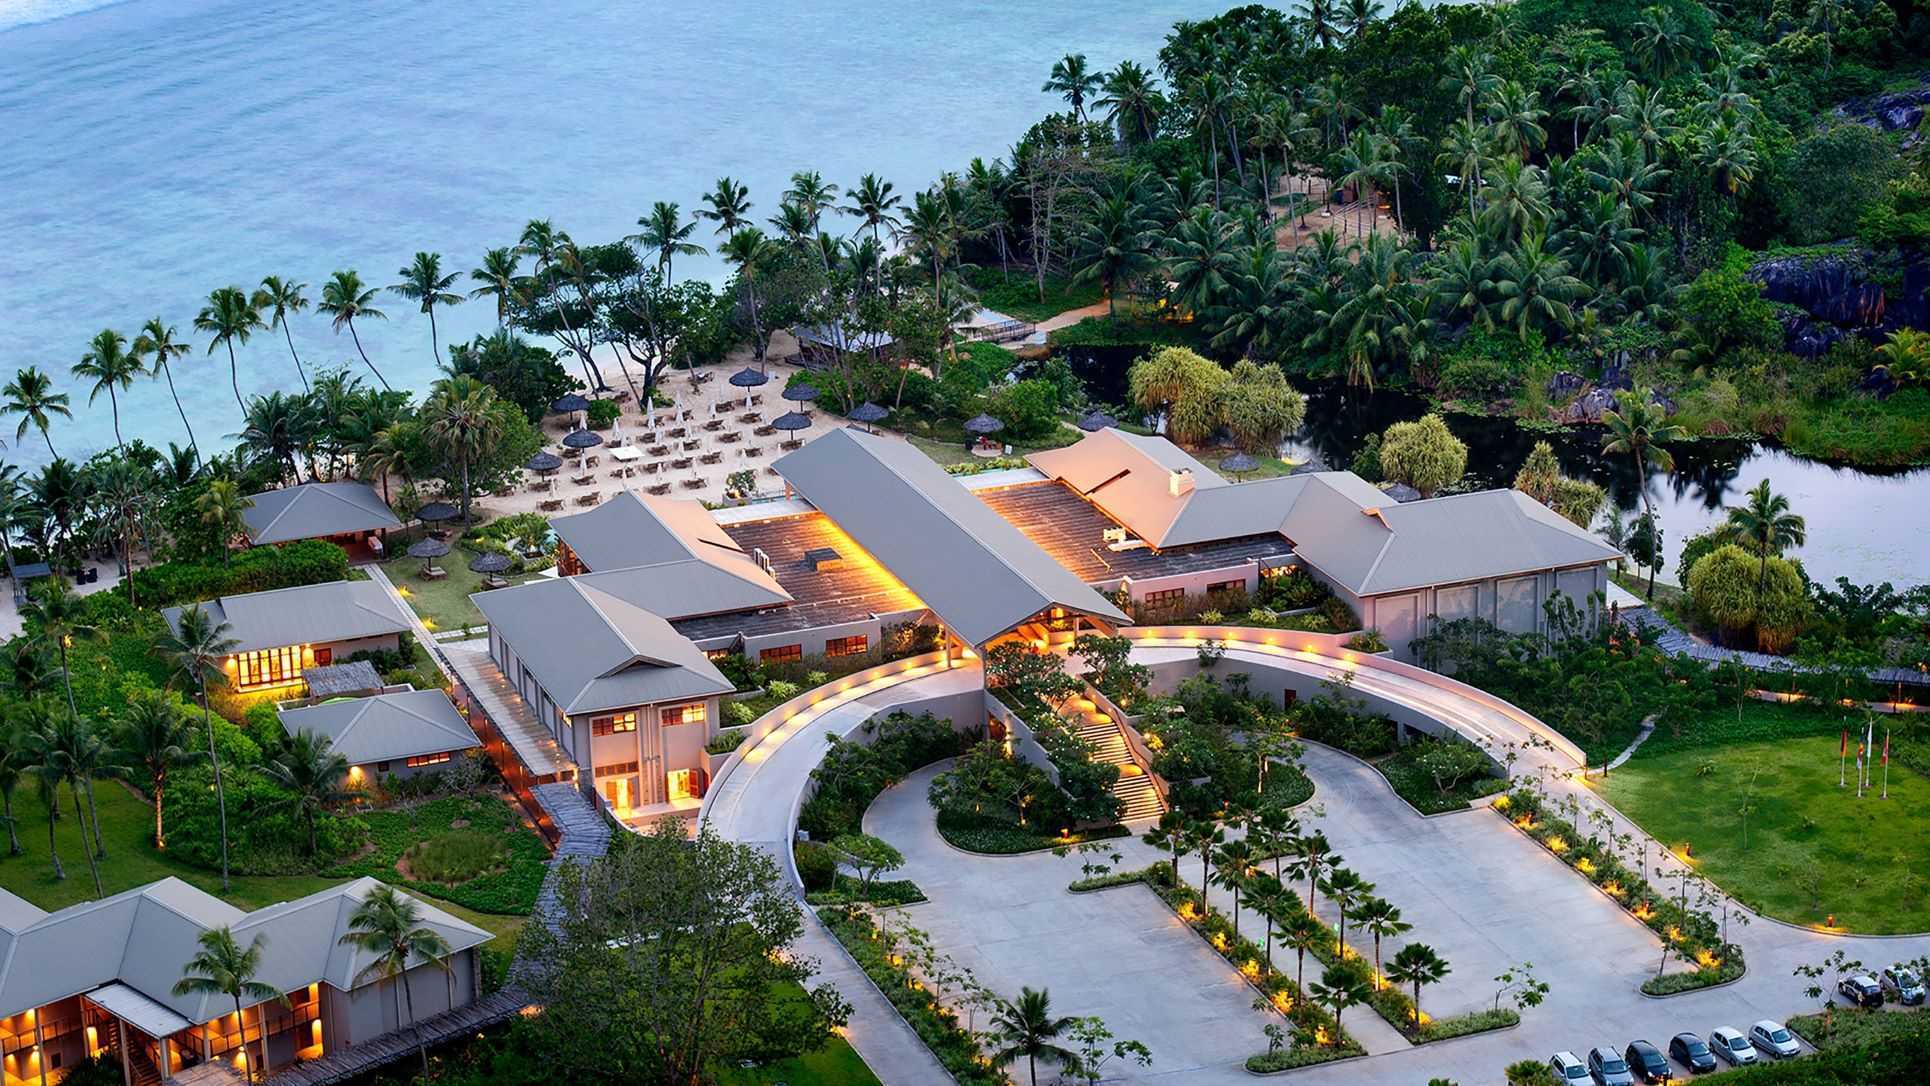 Kempinski Seychelles Resort (DR Kempinski Seychelles resort)